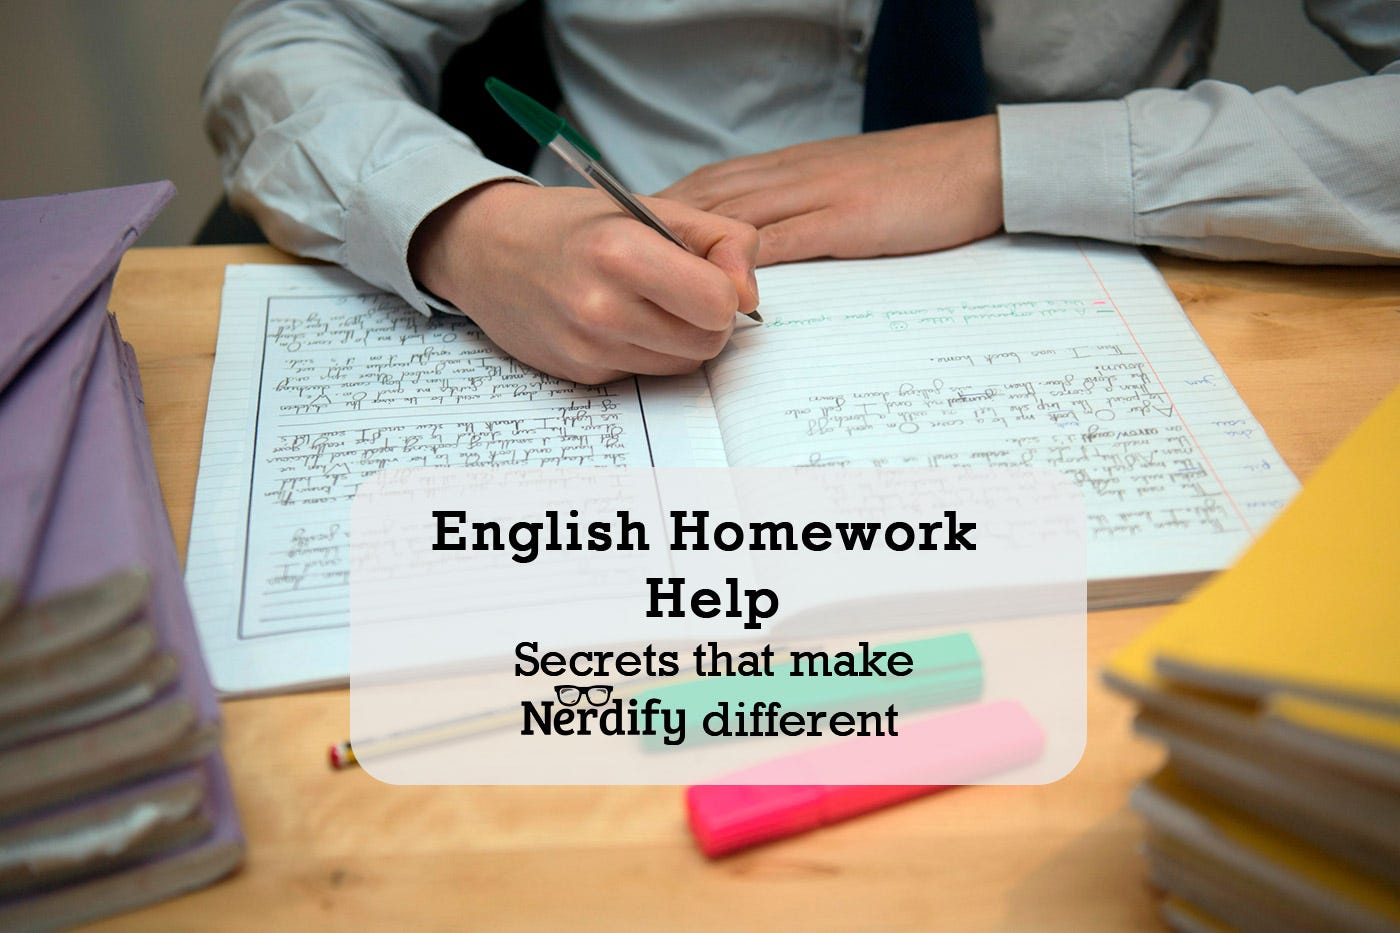 Homework help english